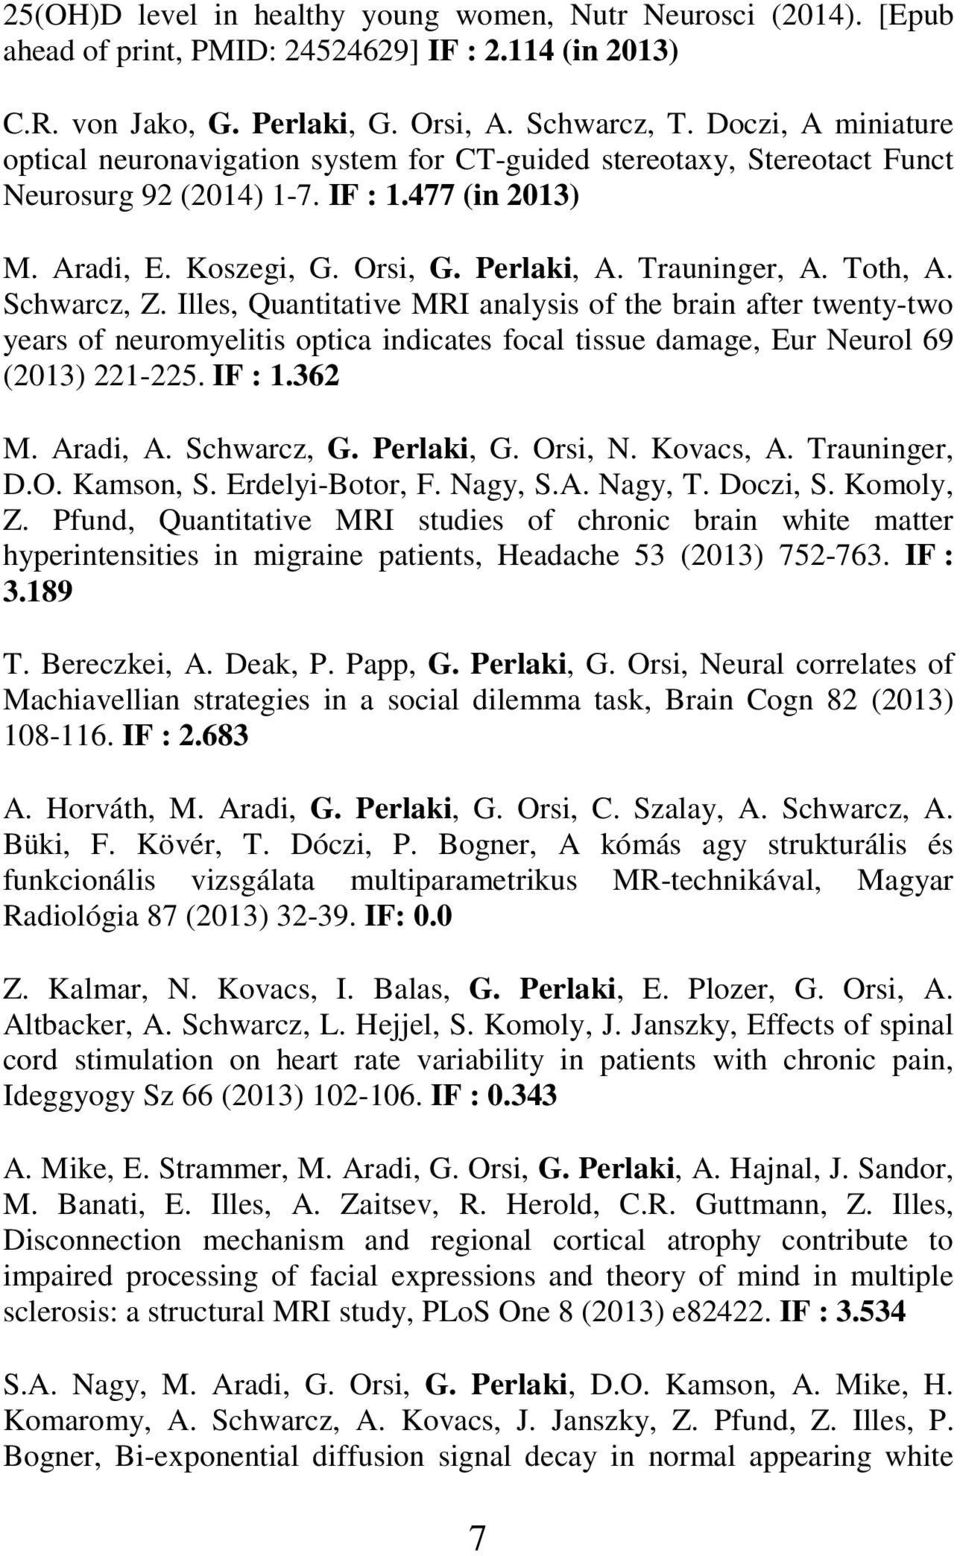 Toth, A. Schwarcz, Z. Illes, Quantitative MRI analysis of the brain after twenty-two years of neuromyelitis optica indicates focal tissue damage, Eur Neurol 69 (2013) 221-225. IF : 1.362 M. Aradi, A.